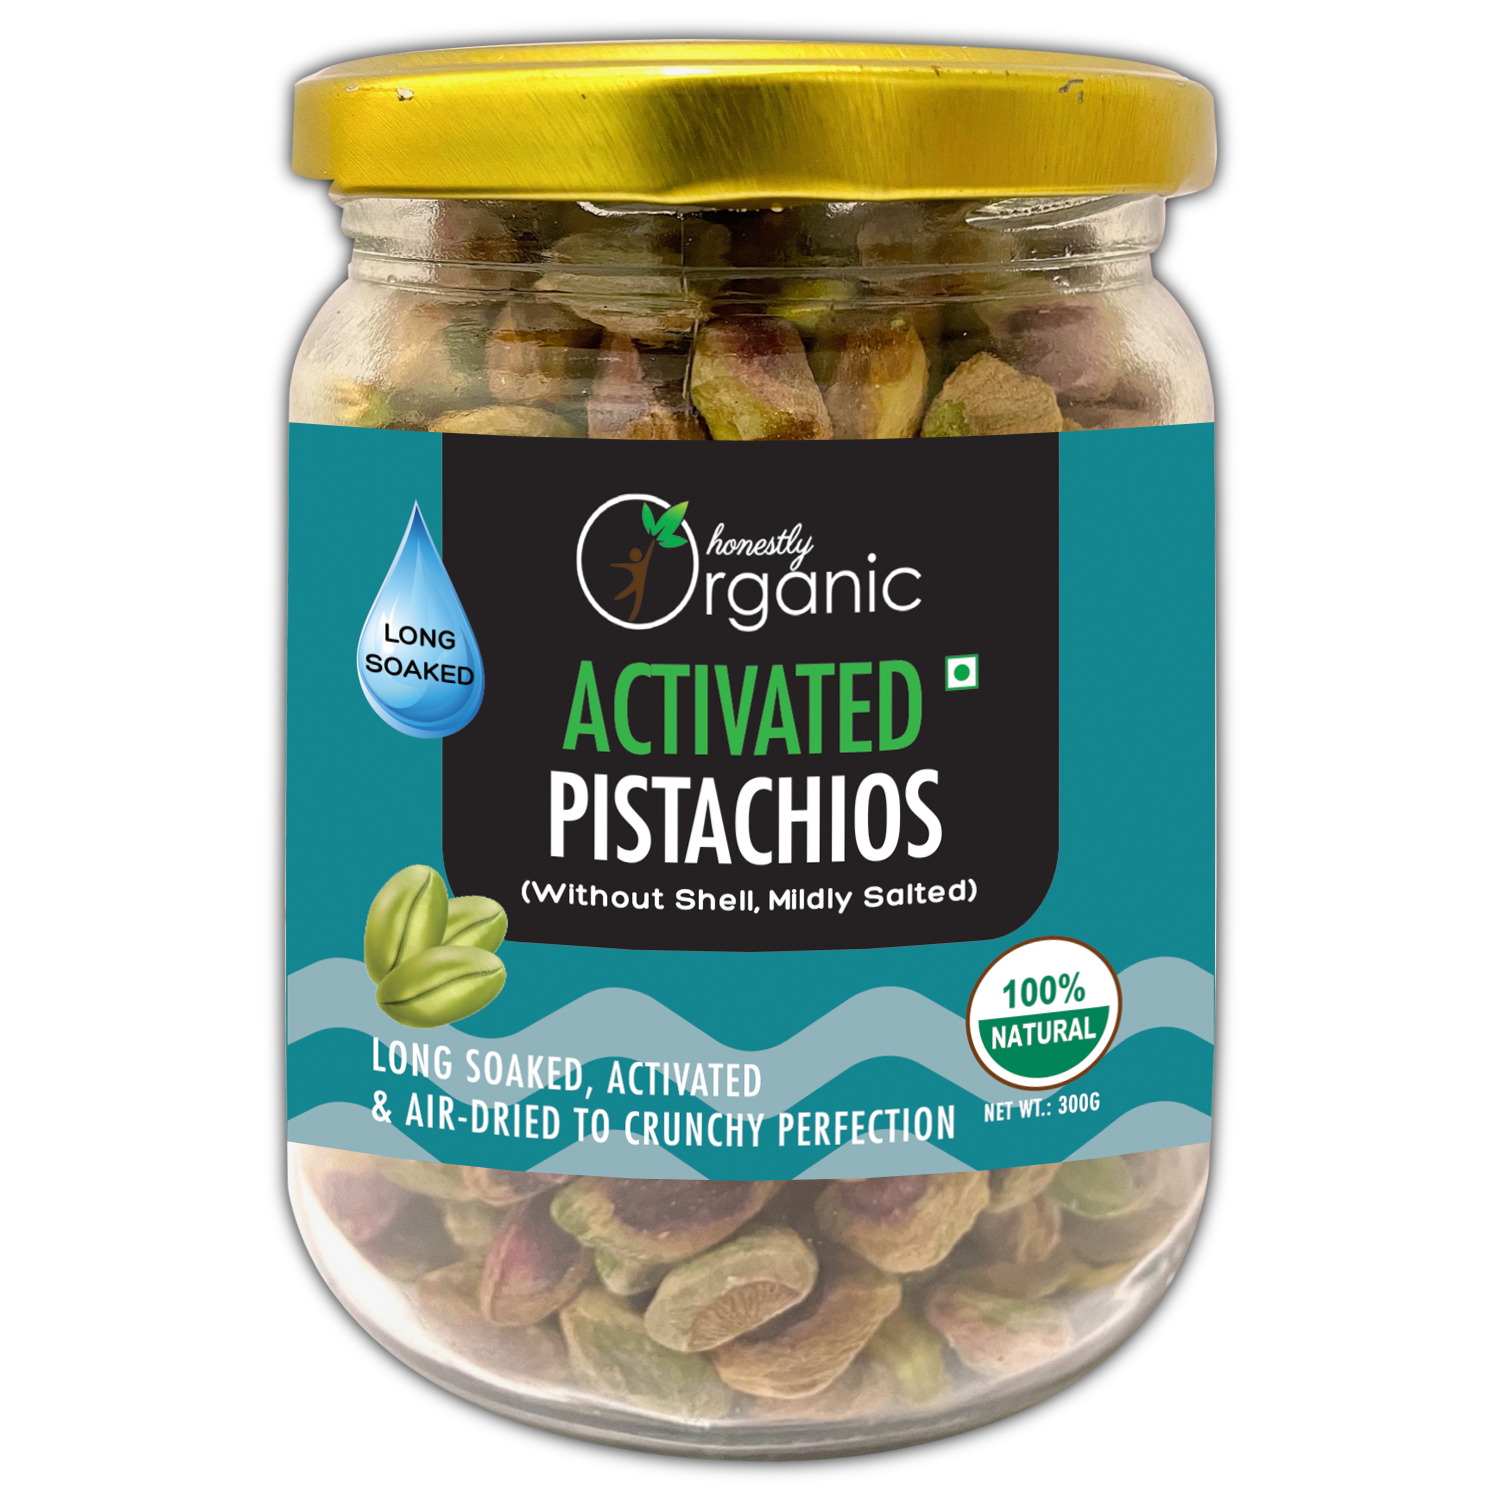 Product: D-alive Activated Pistachios